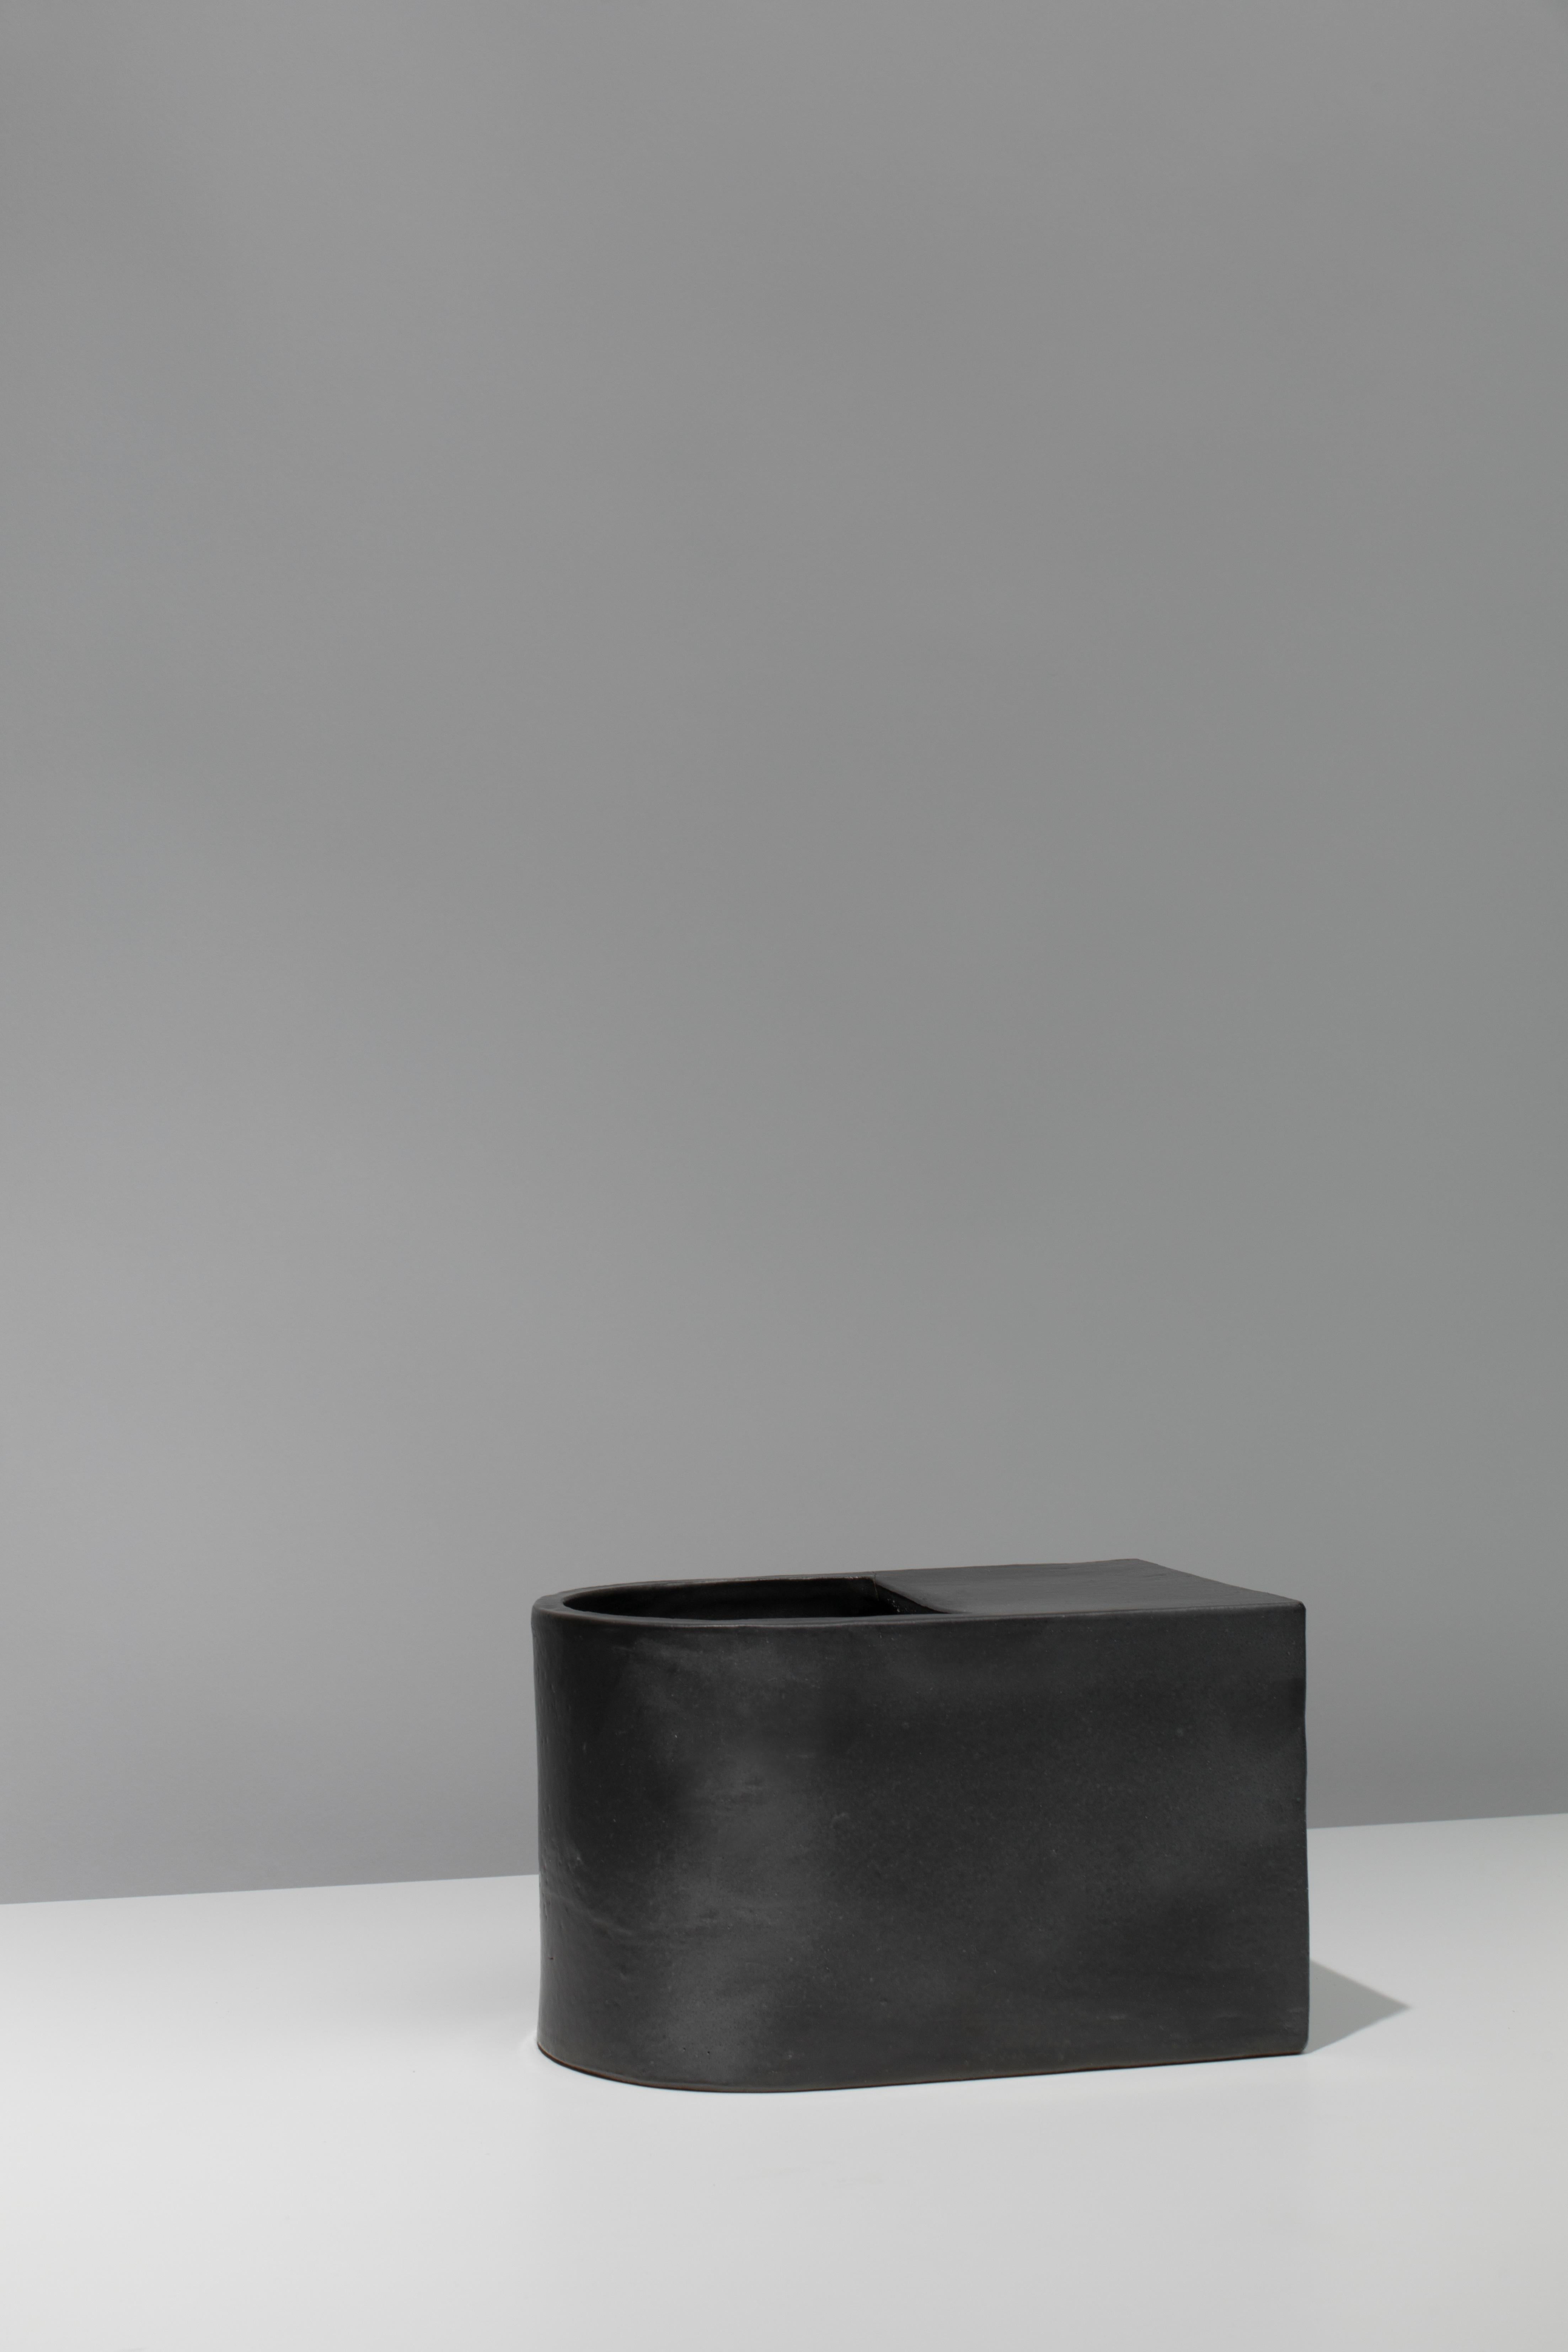 Minimalist Jonathan Nesci w/ Robert Pulley Ceramic Vessel with Black Coppered Glaze 18/08